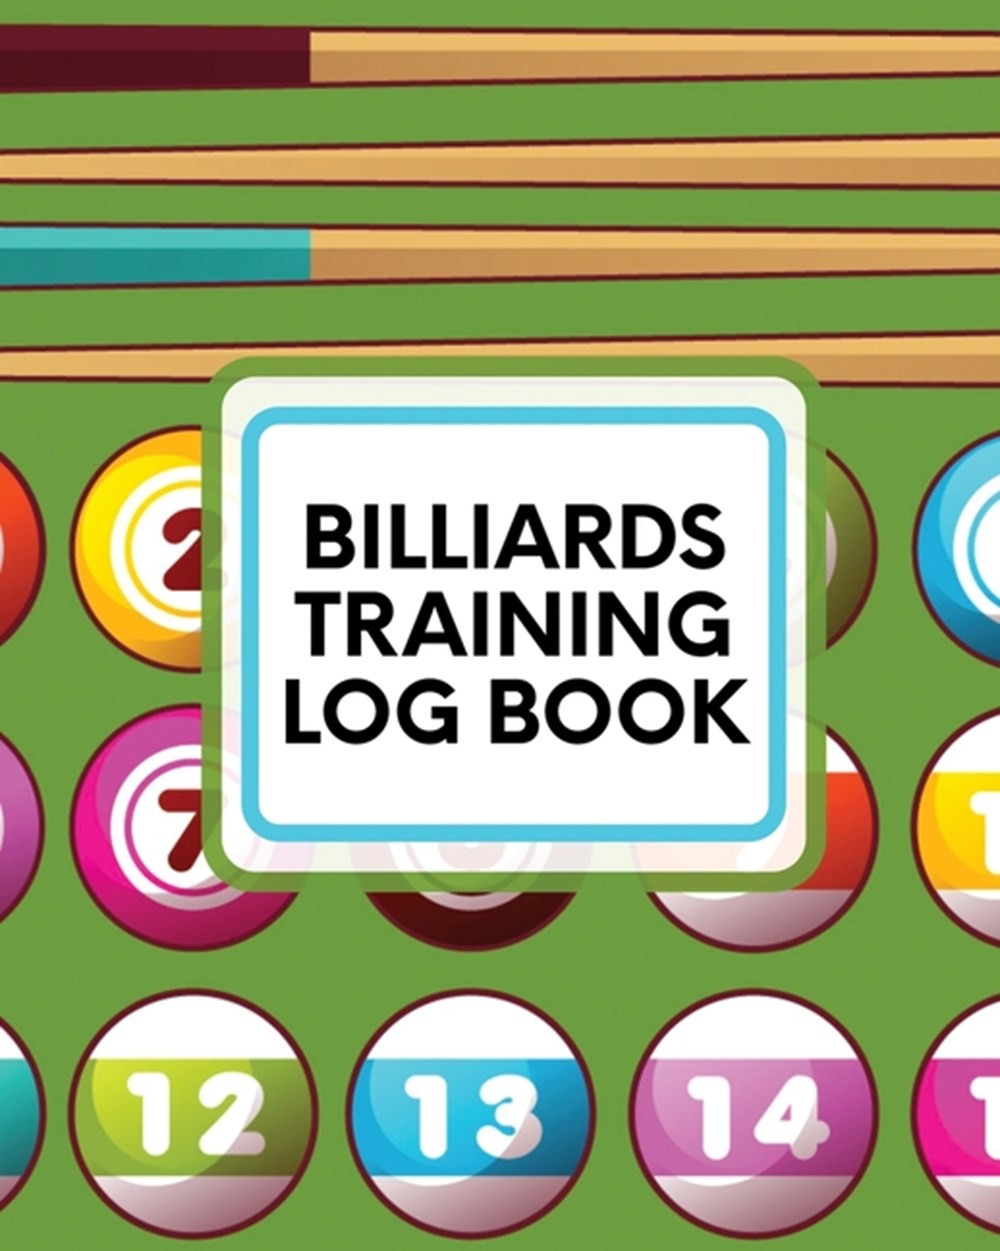 Billiards Training Log Book: Every Pool Player - Pocket Billiards - Practicing Pool Game - Individua